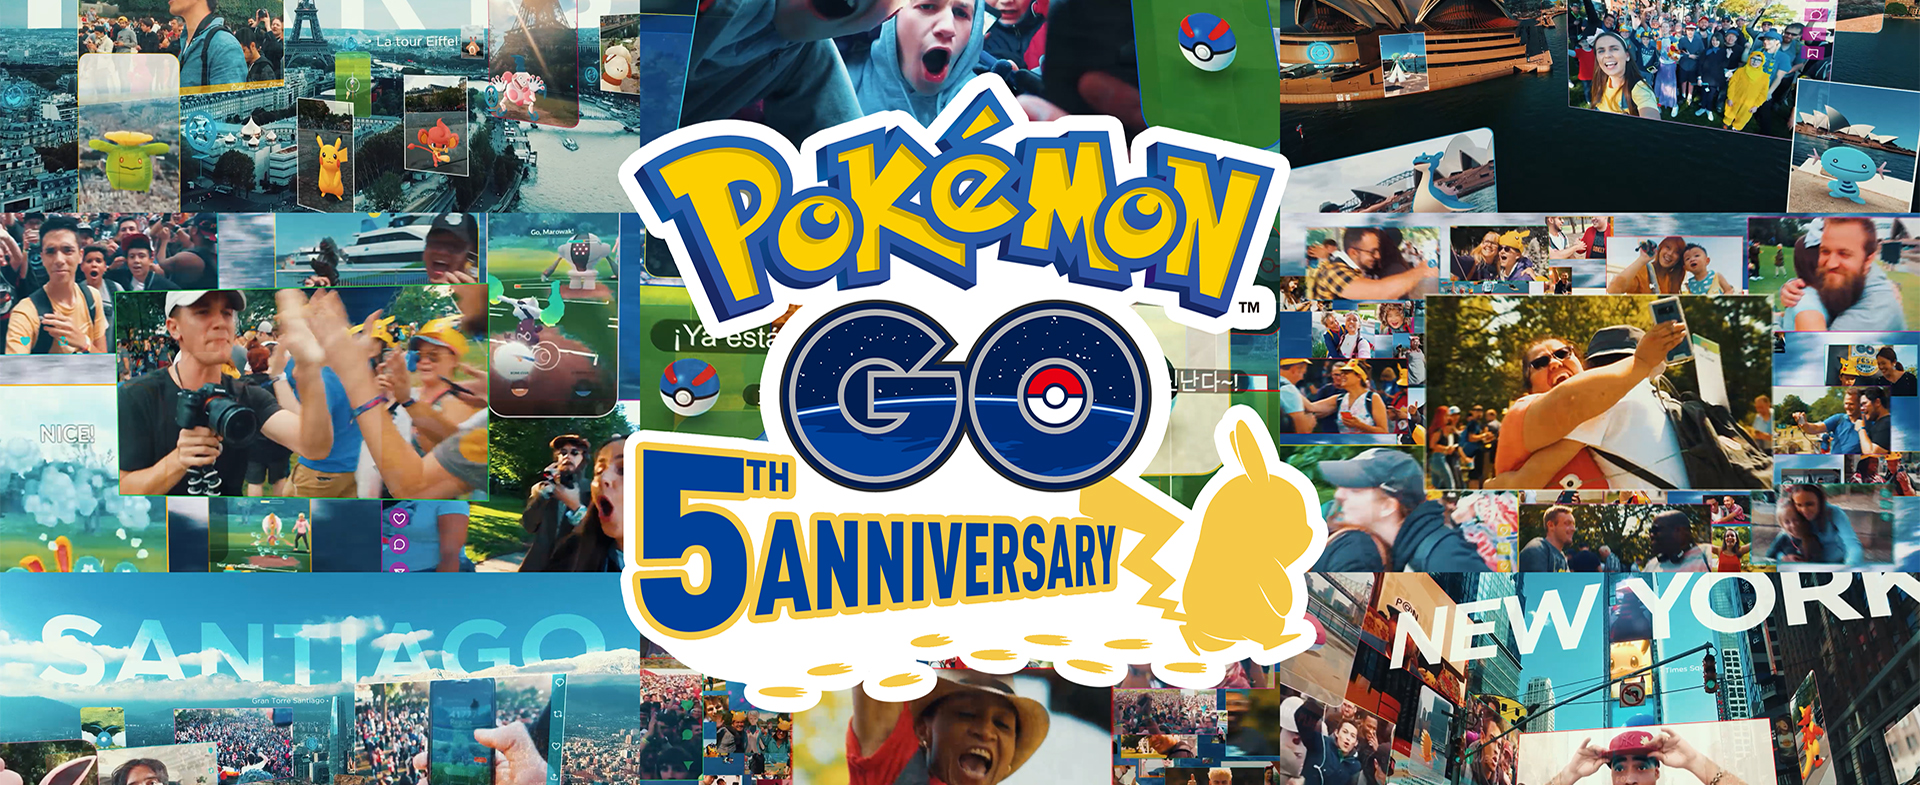 『Pokémon GO』5周年記念映像「Adventures Go on!」